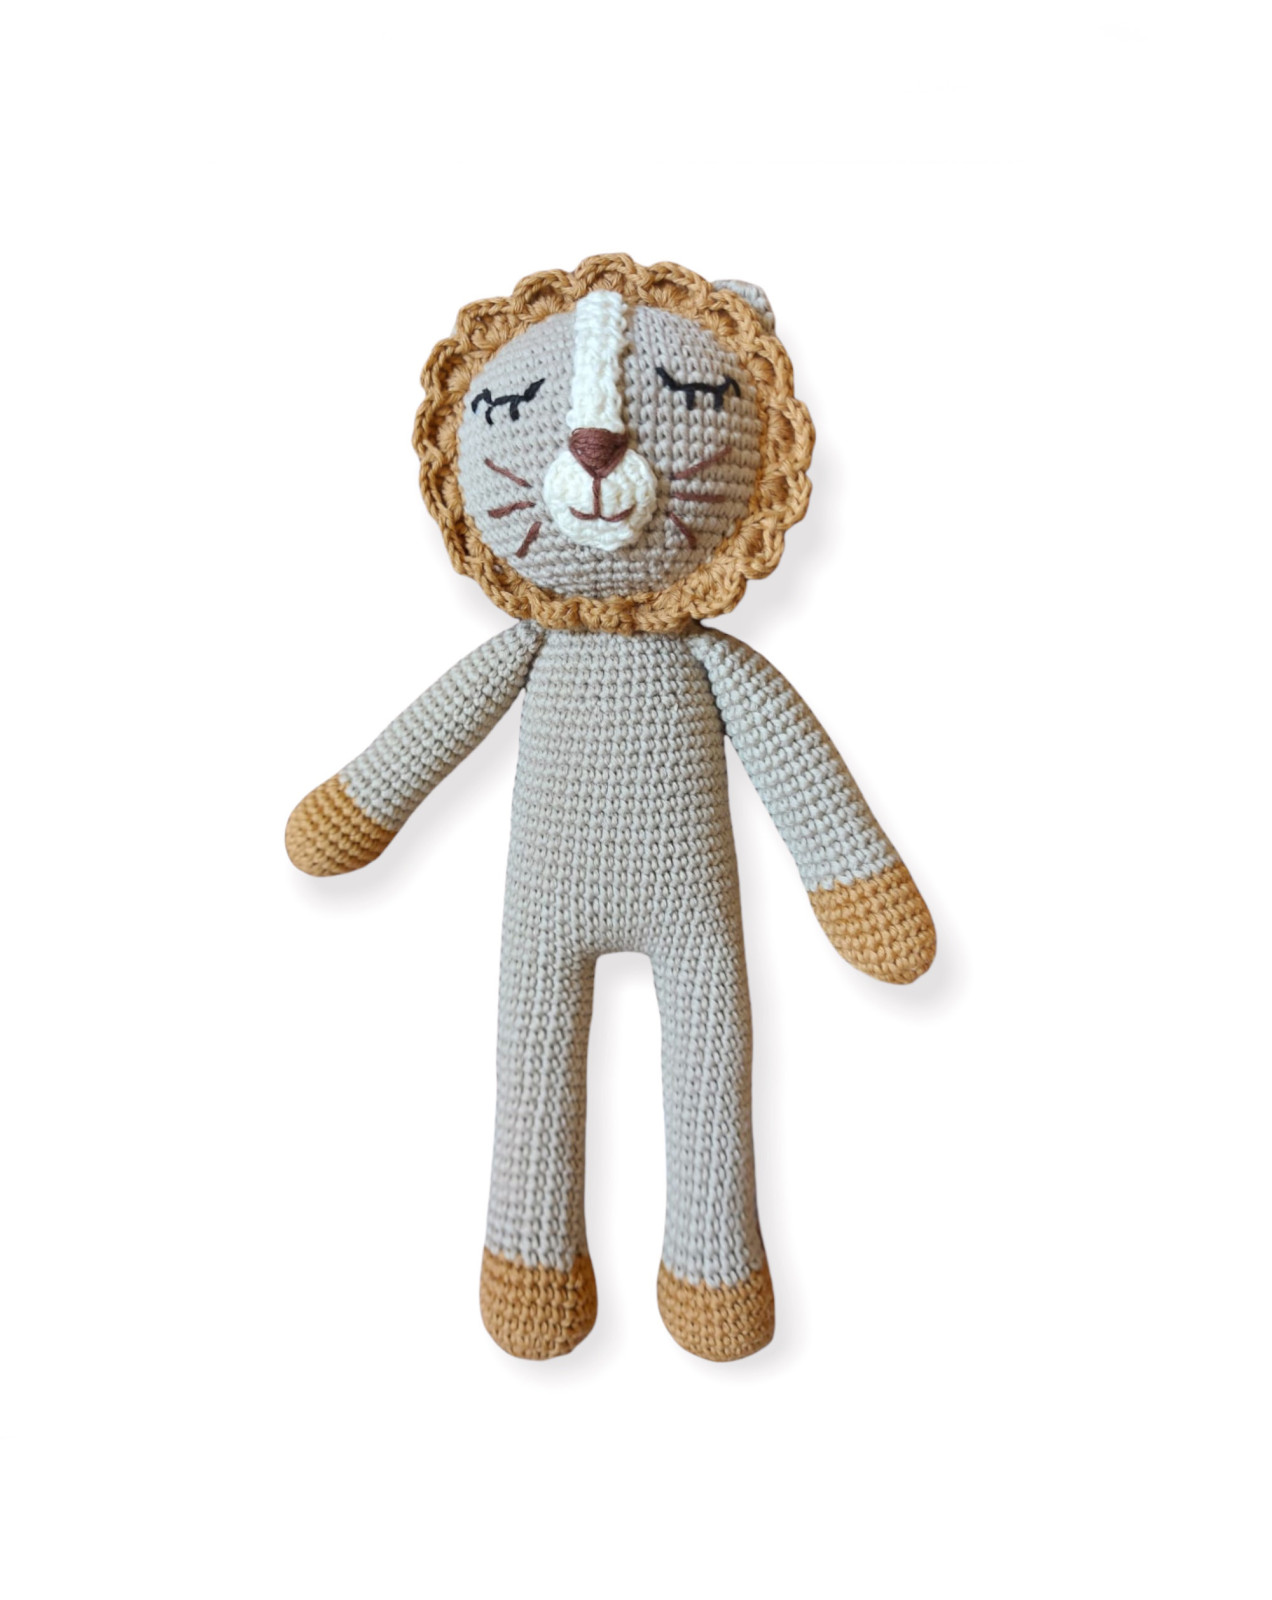 Hand made crochet Sleeping Lion, 100% biologic cotton.